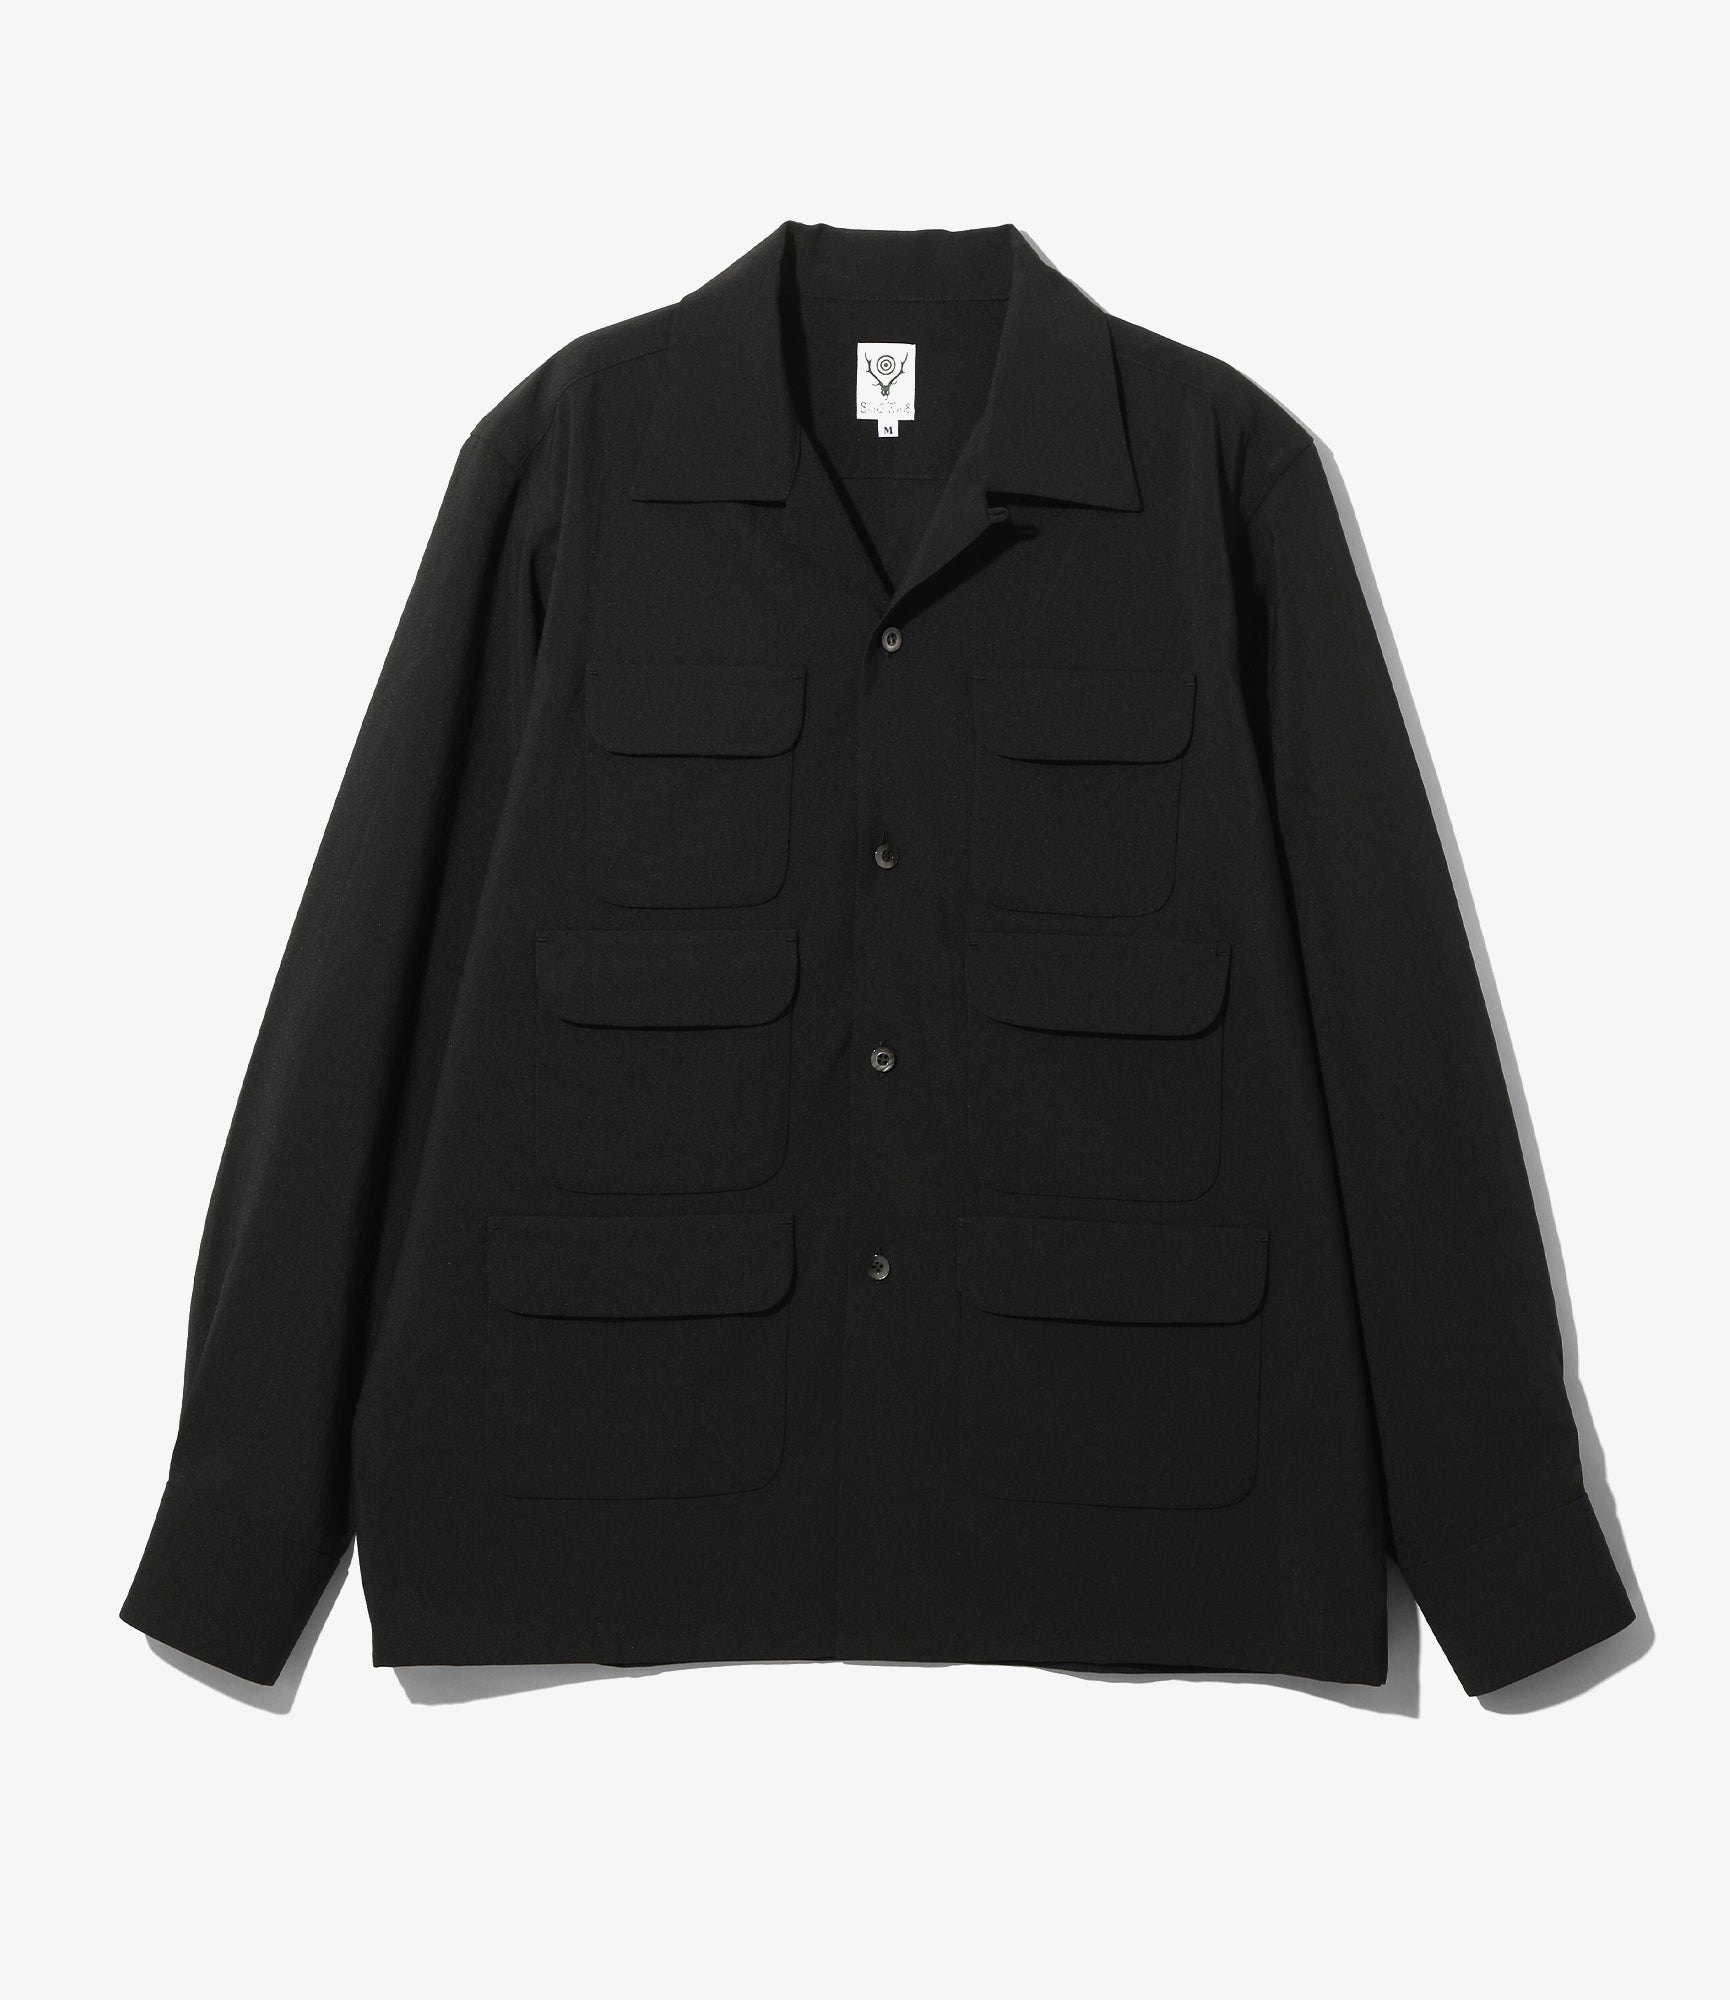 6 Pocket Classic Shirt - Black - Poly Tropical Cloth